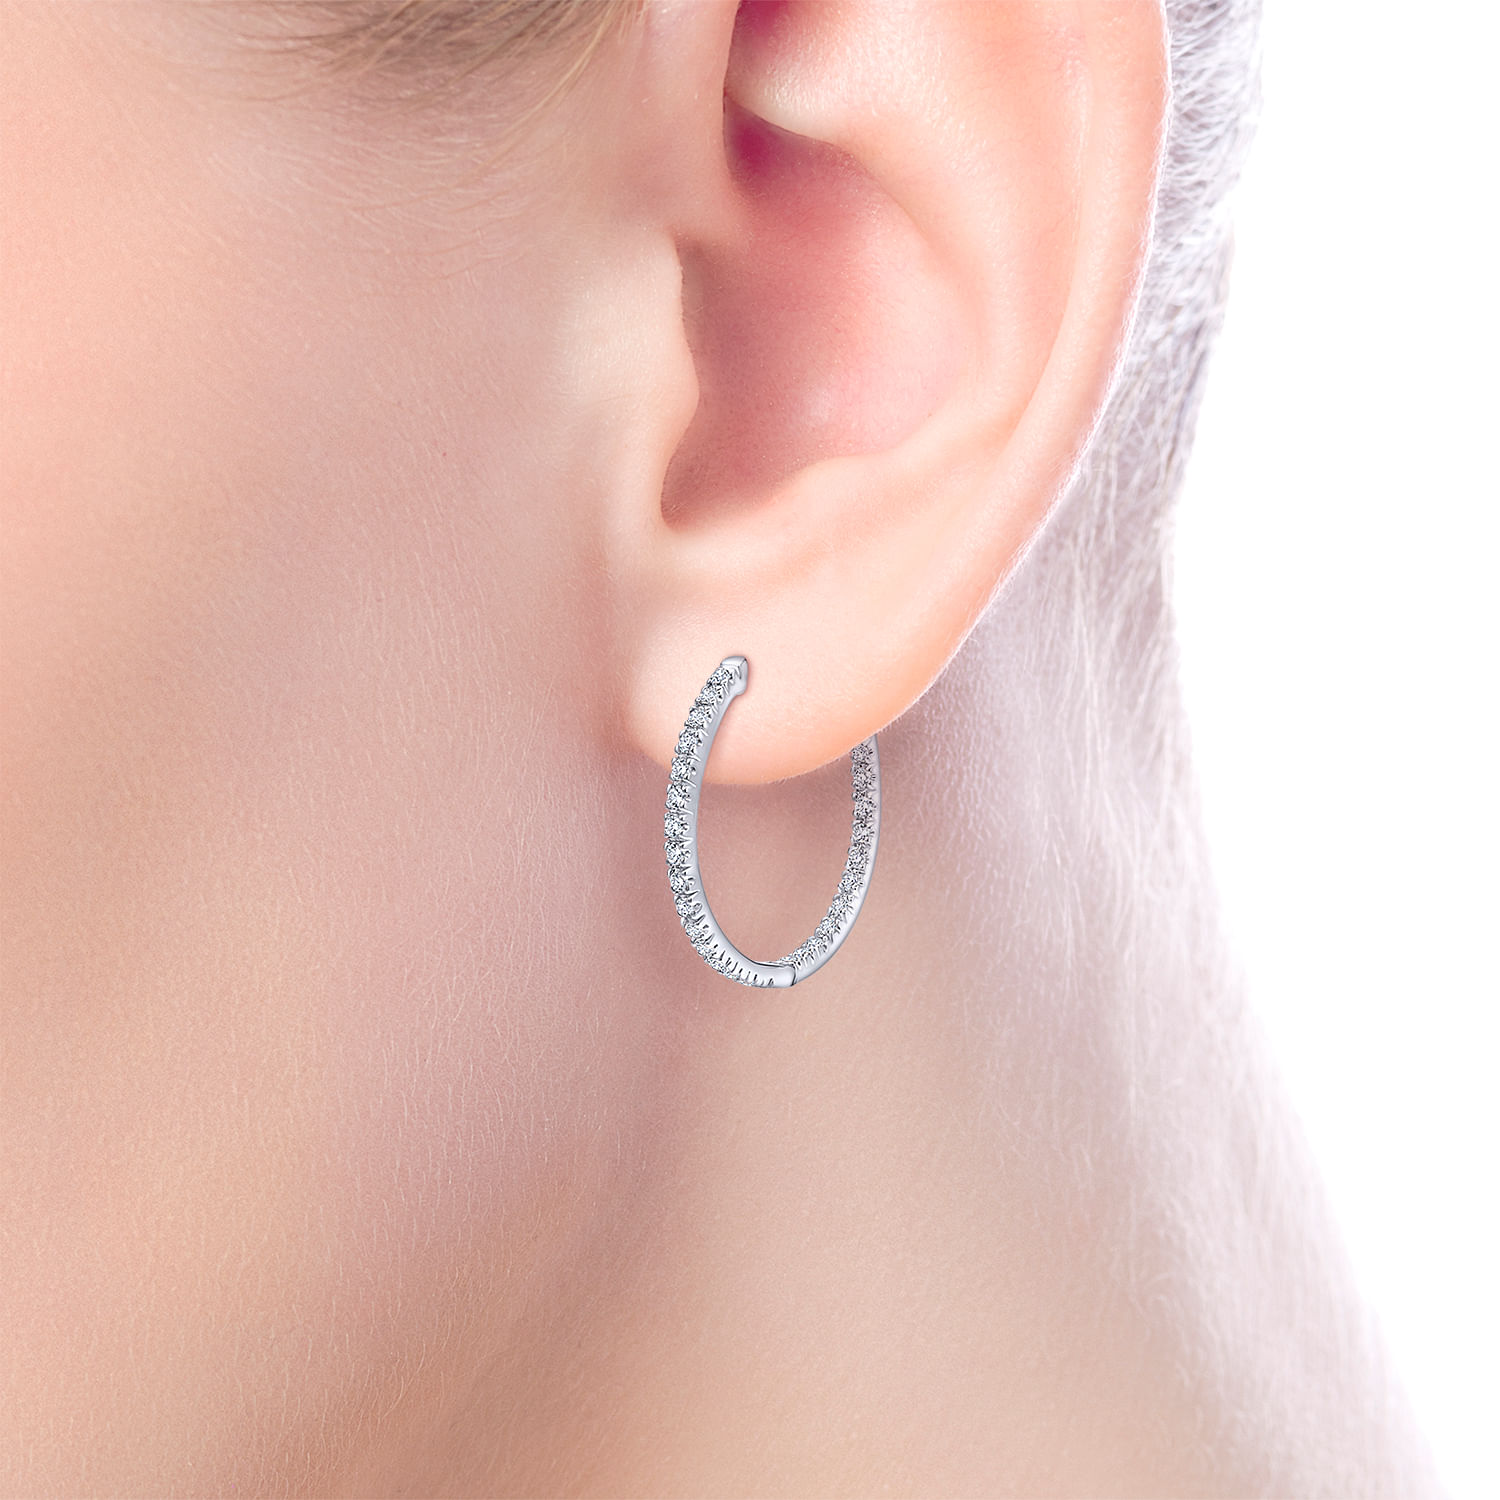 14K White Gold 20mm Round Inside Out Diamond Hoop Earrings